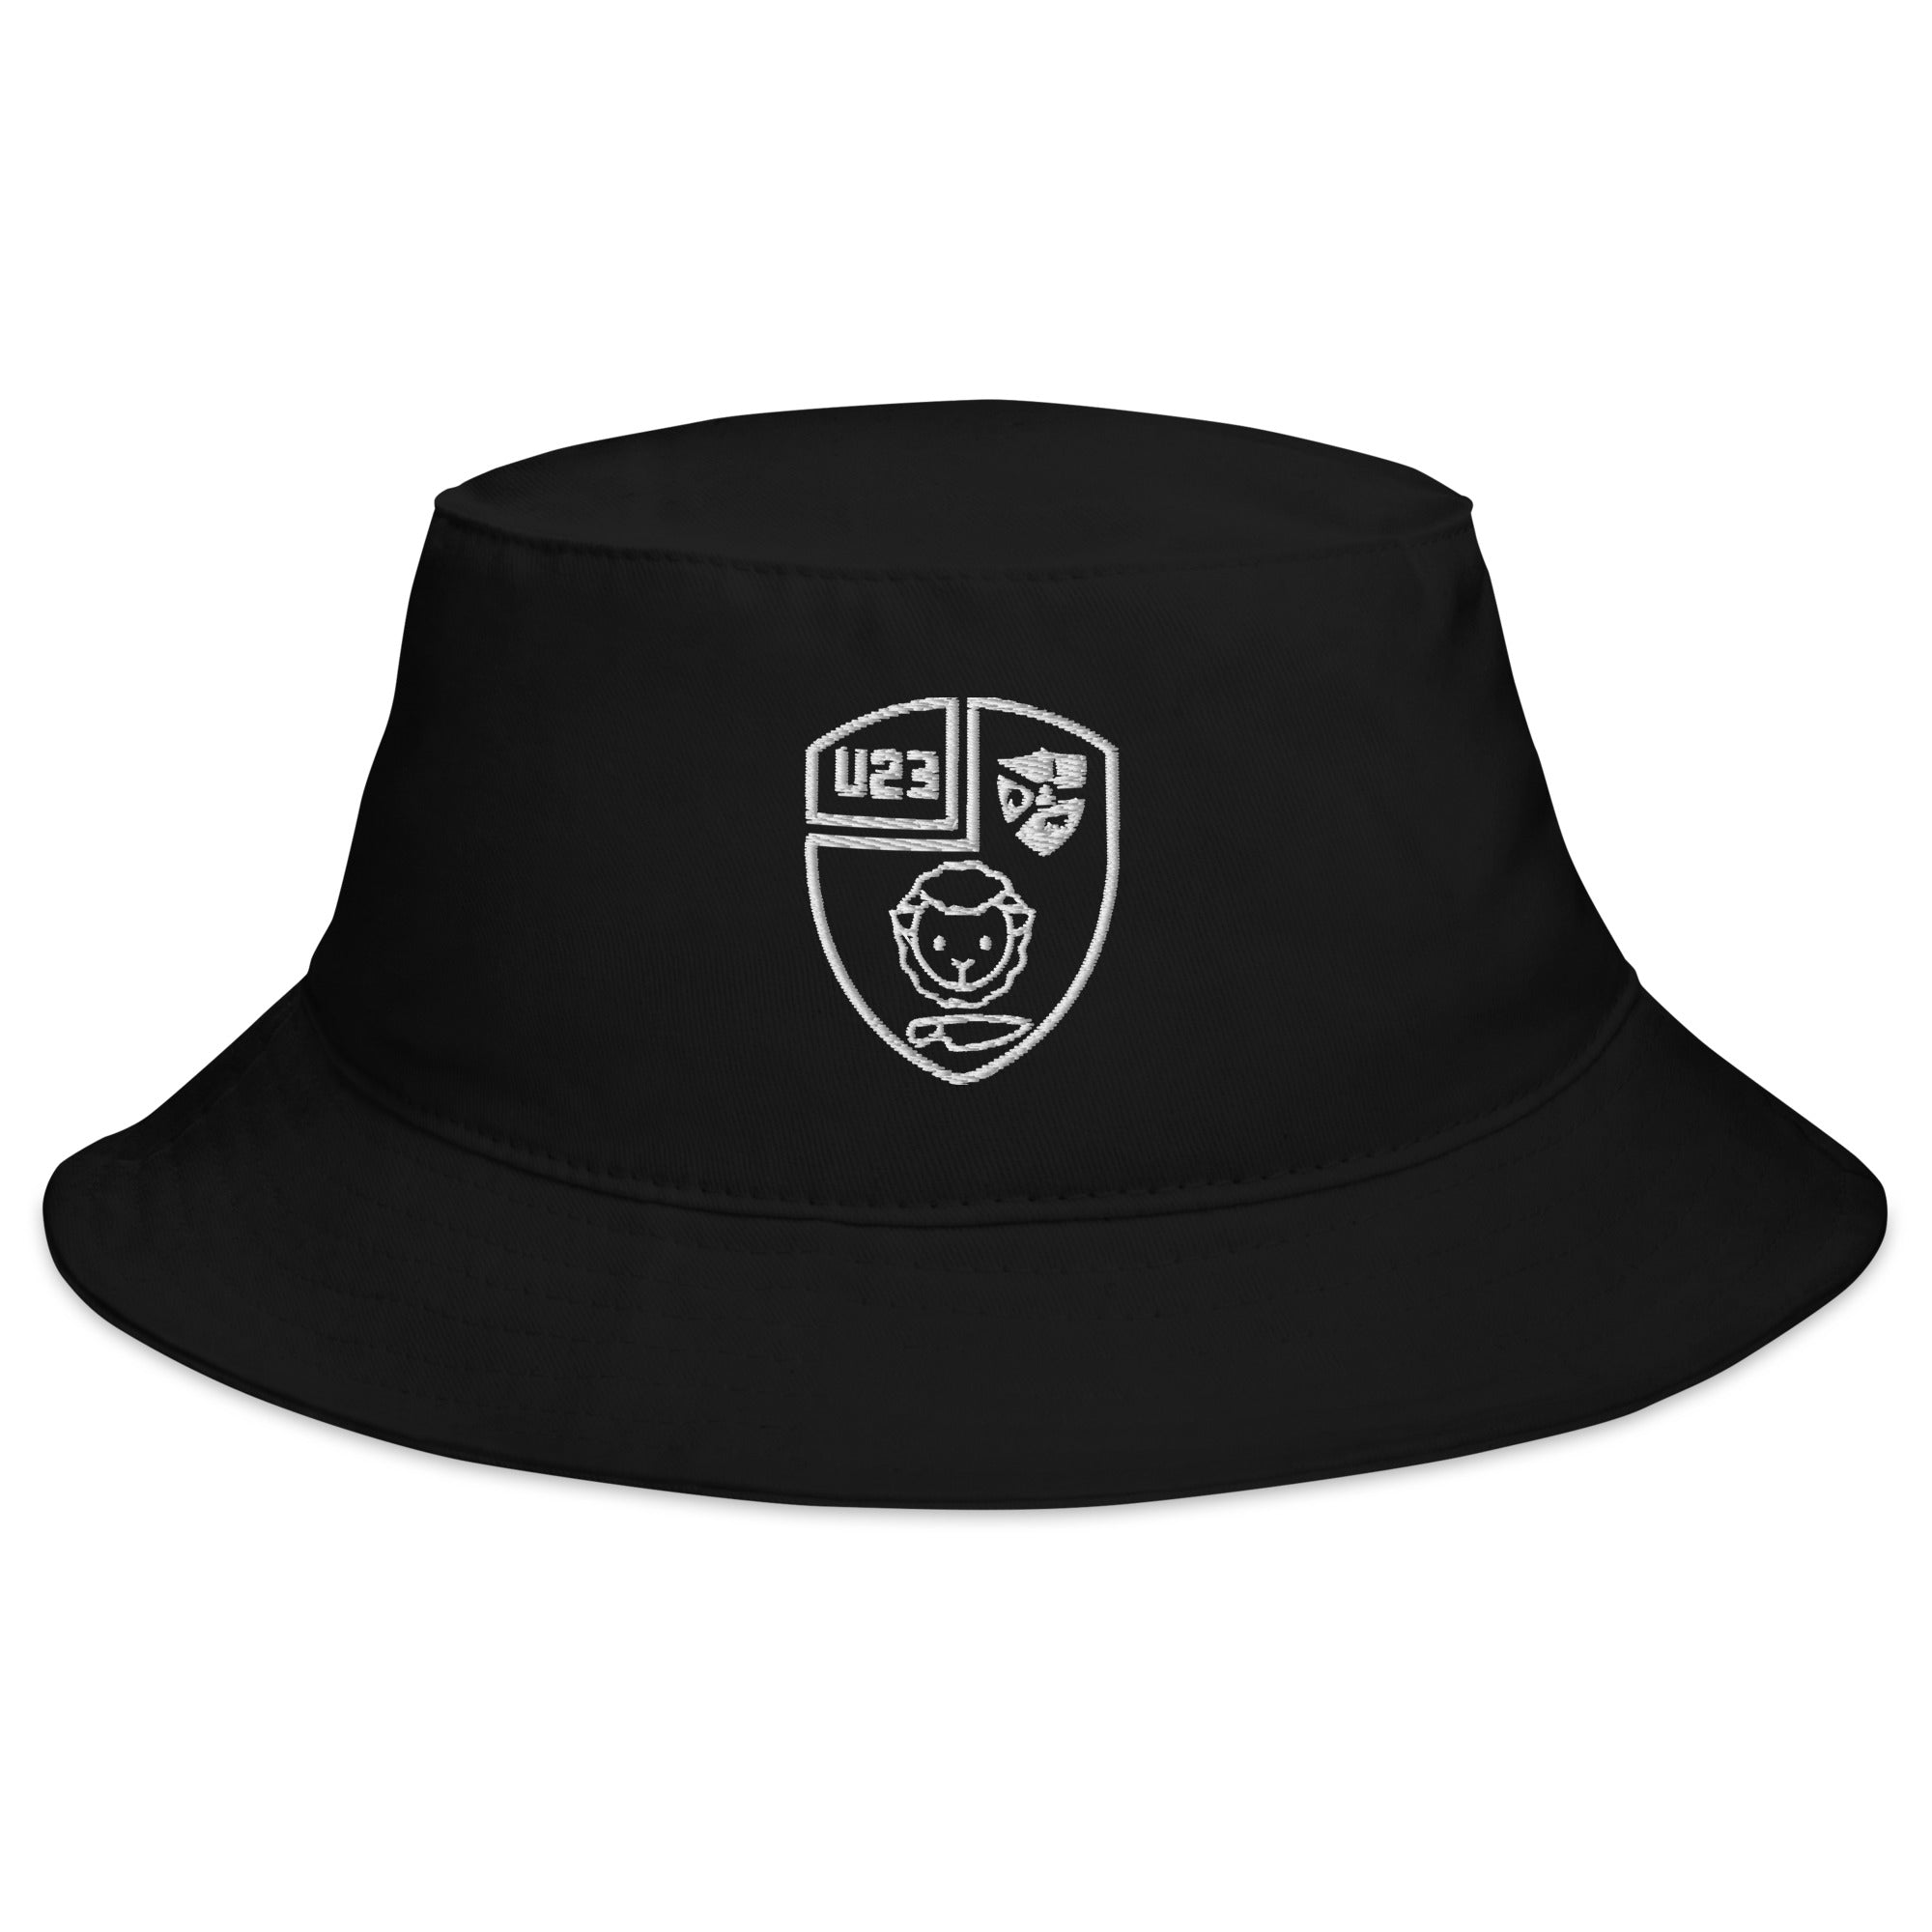 Rugby Imports Black & Blue U23 Bucket Hat